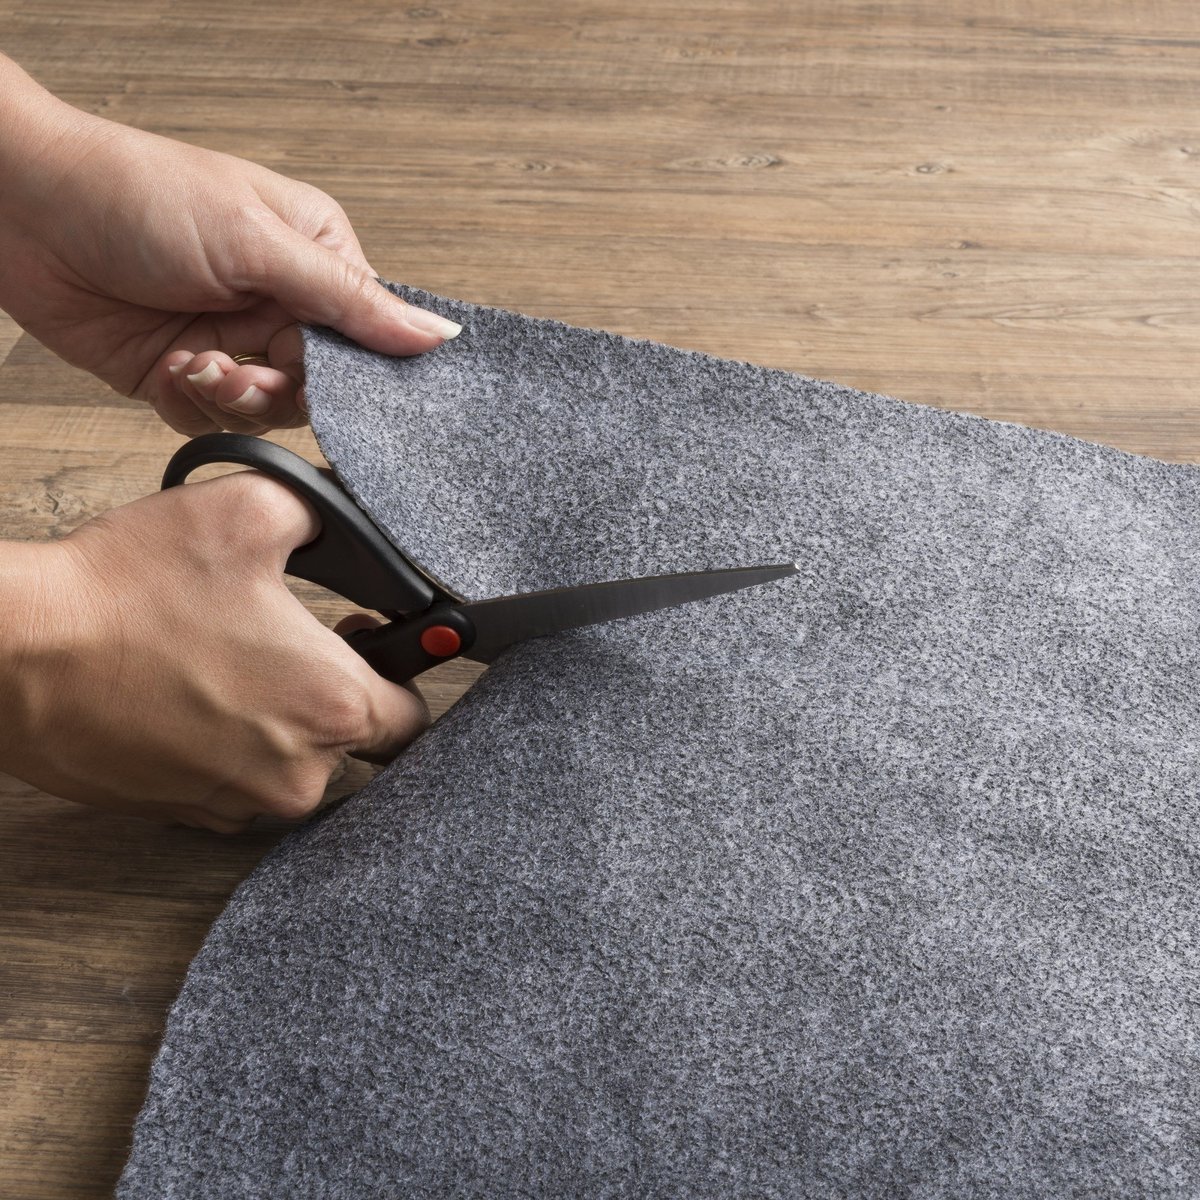 non-slip rug pads safe for lvp flooring